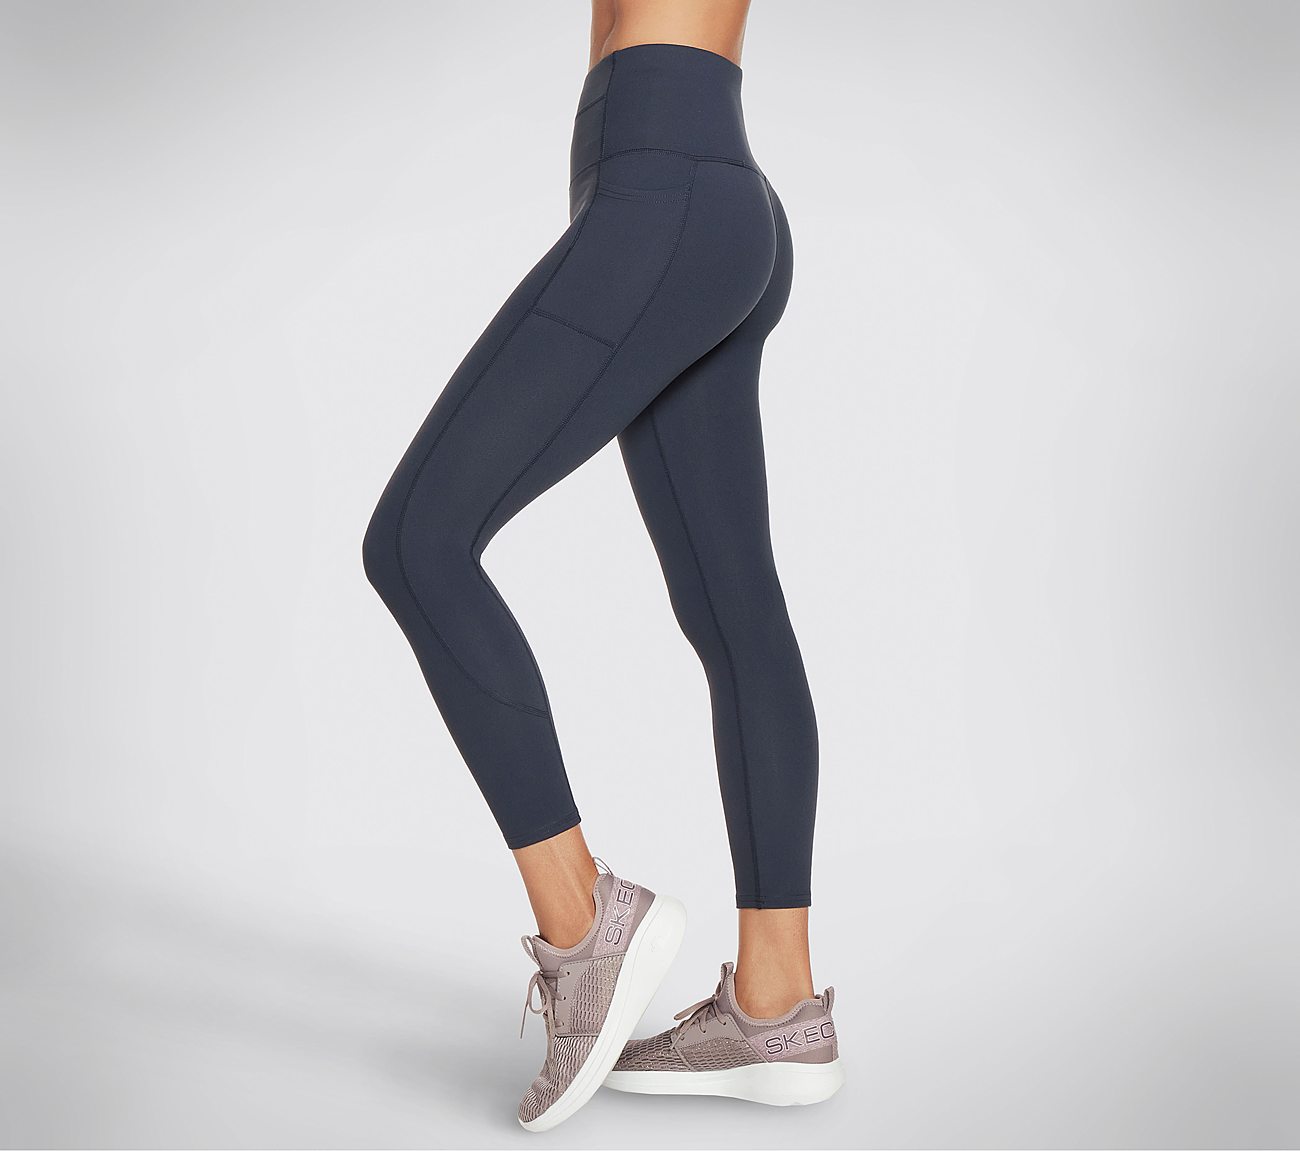 New Balance Dry Black Silver Reflective Capri Yoga Leggings Size Small  pocket